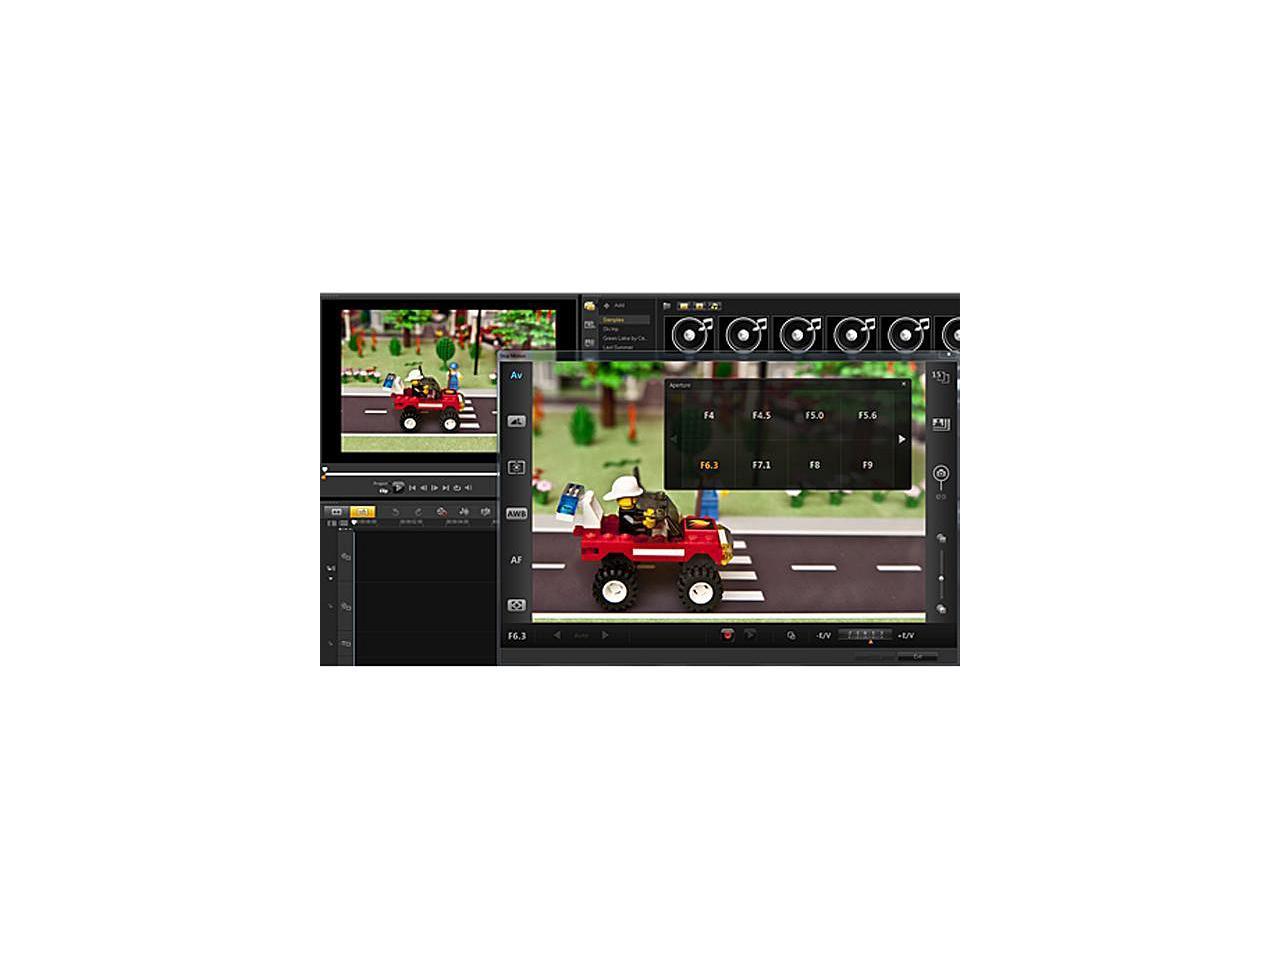 corel videostudio pro x6 screen capture